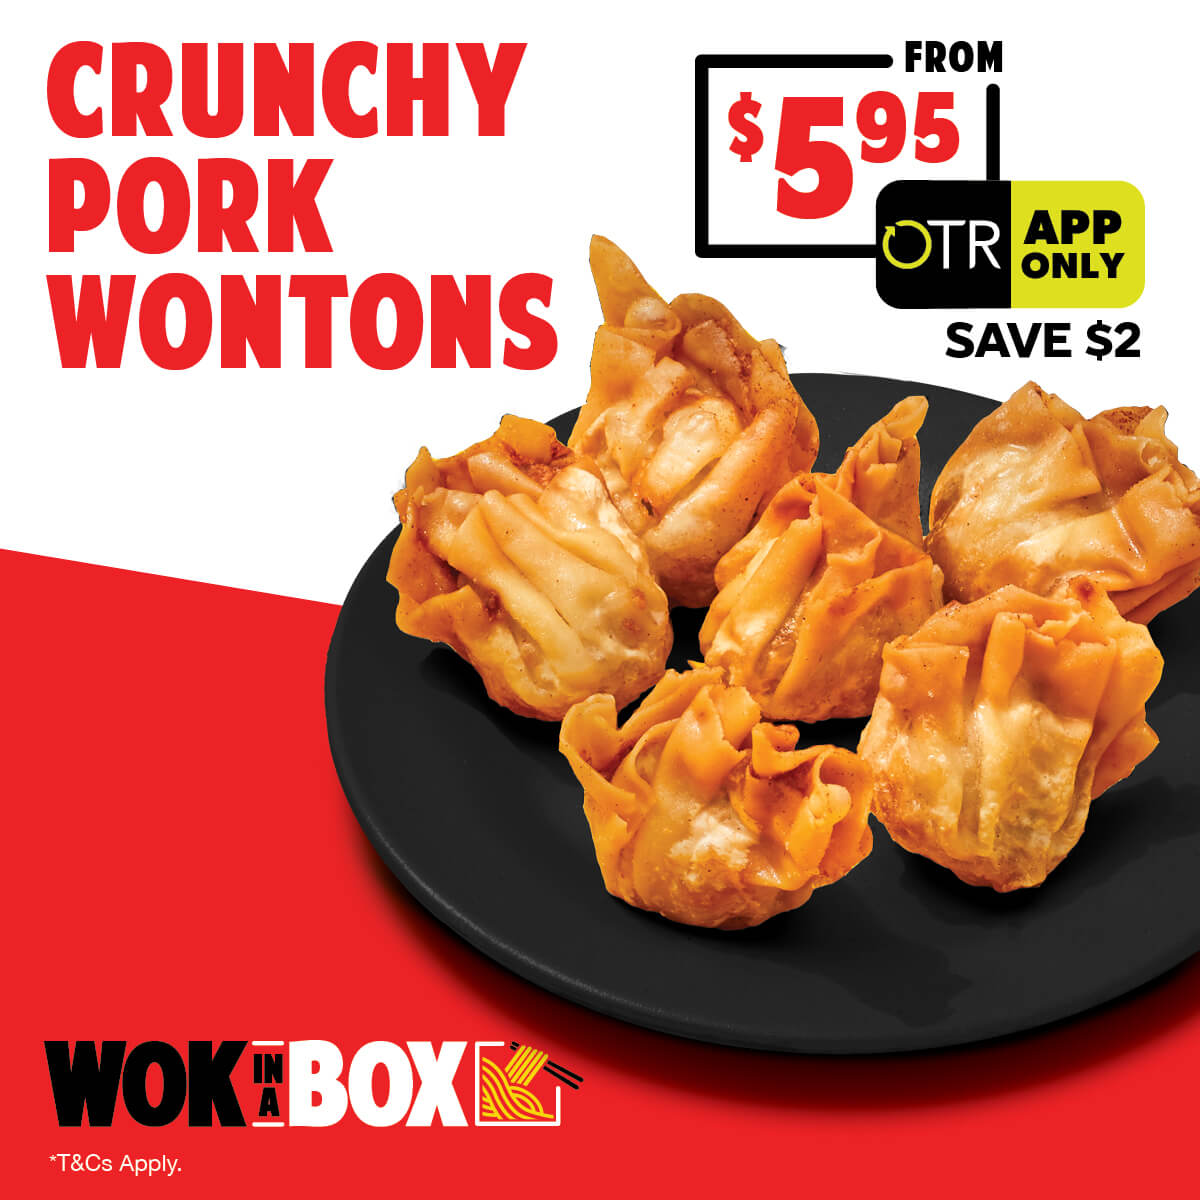 6 Crunchy Pork Wontons for $5.95